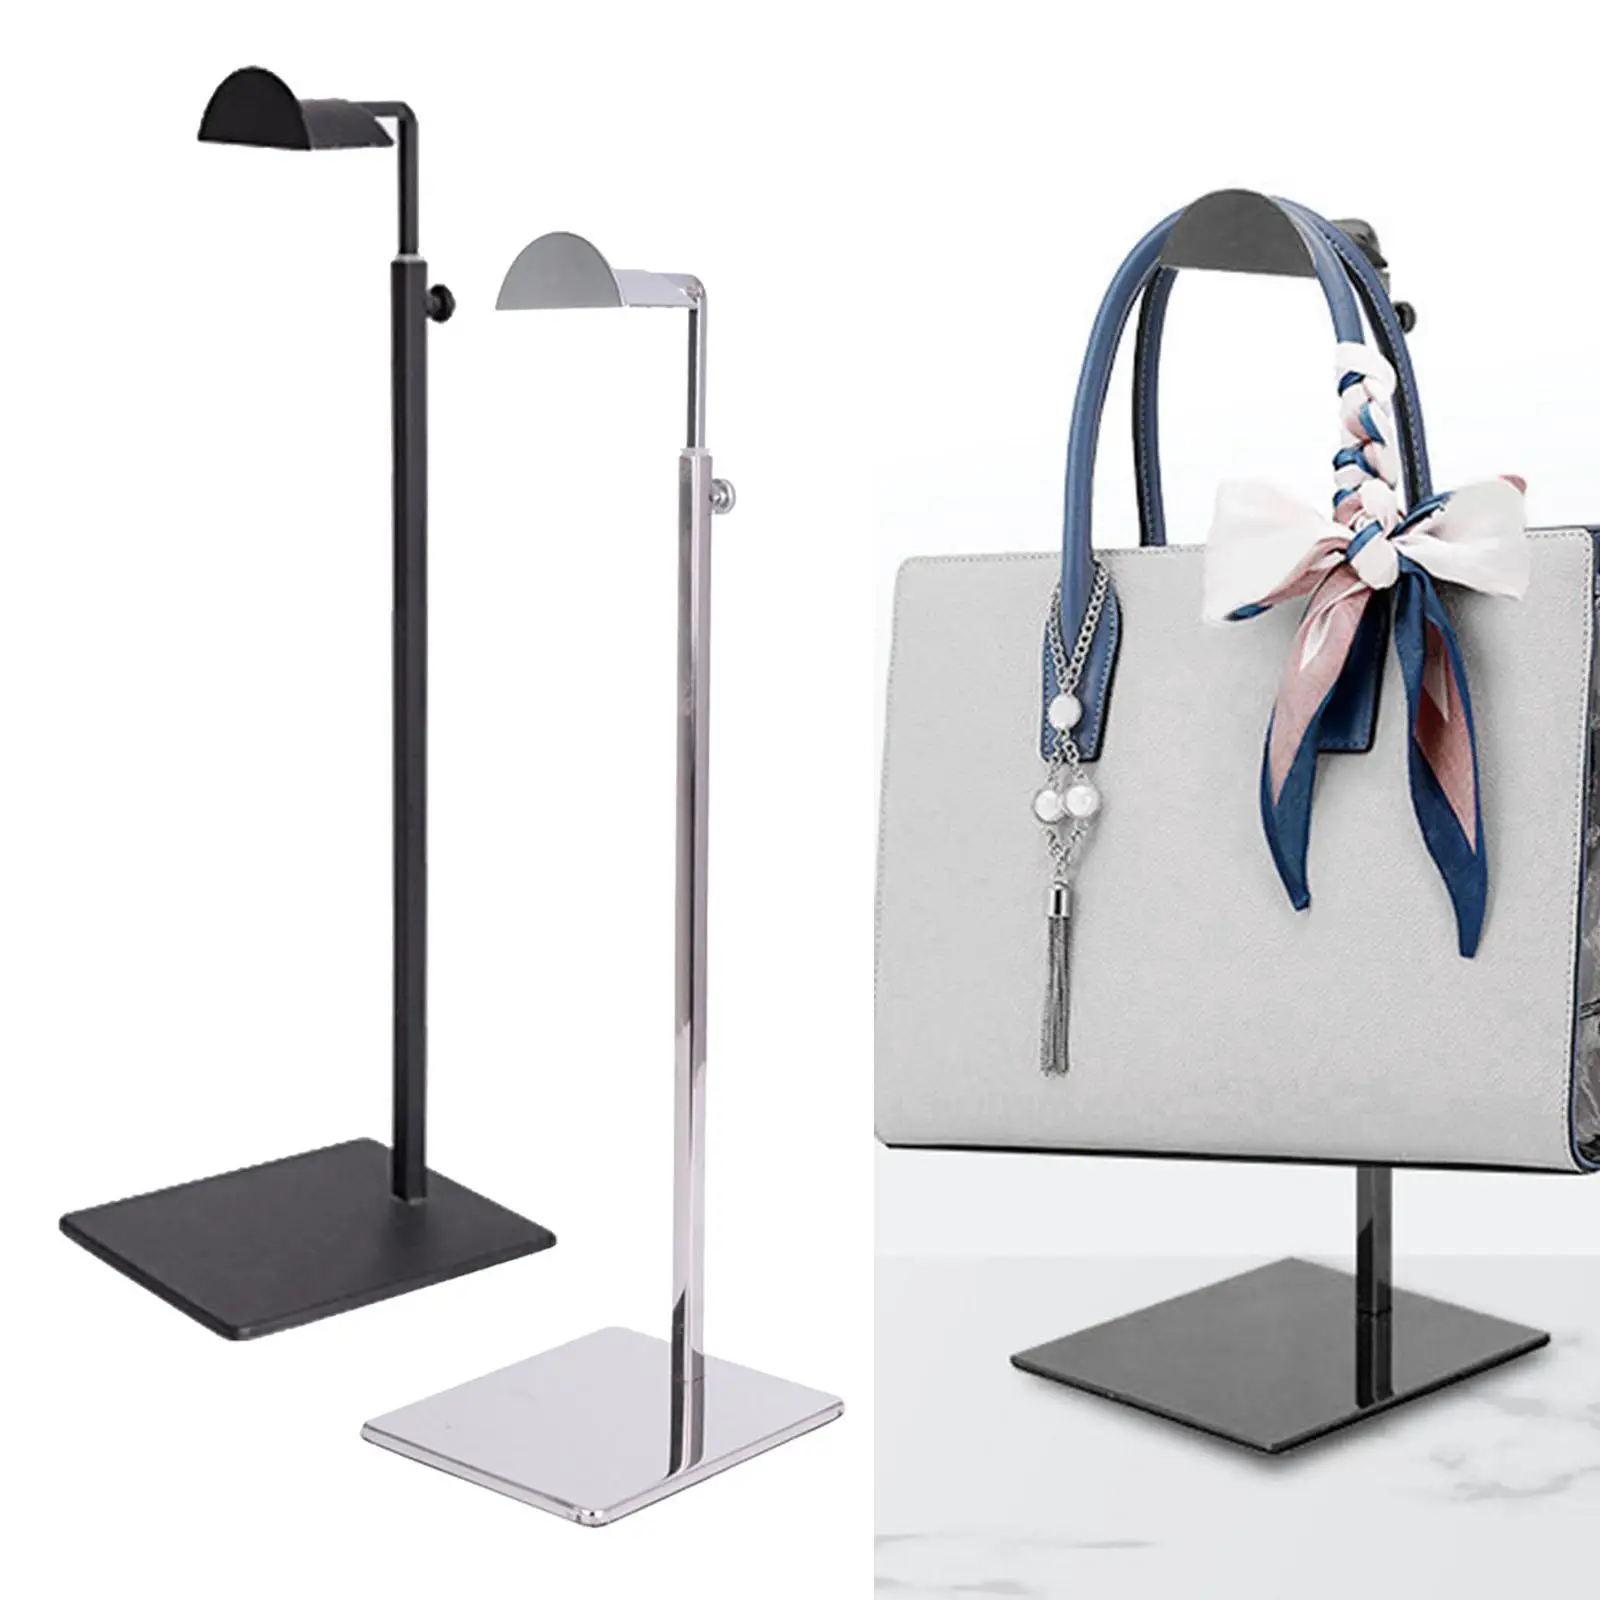 Handbag Display Stand Adjustable Height Organizer Storage for Home Shelves Windows